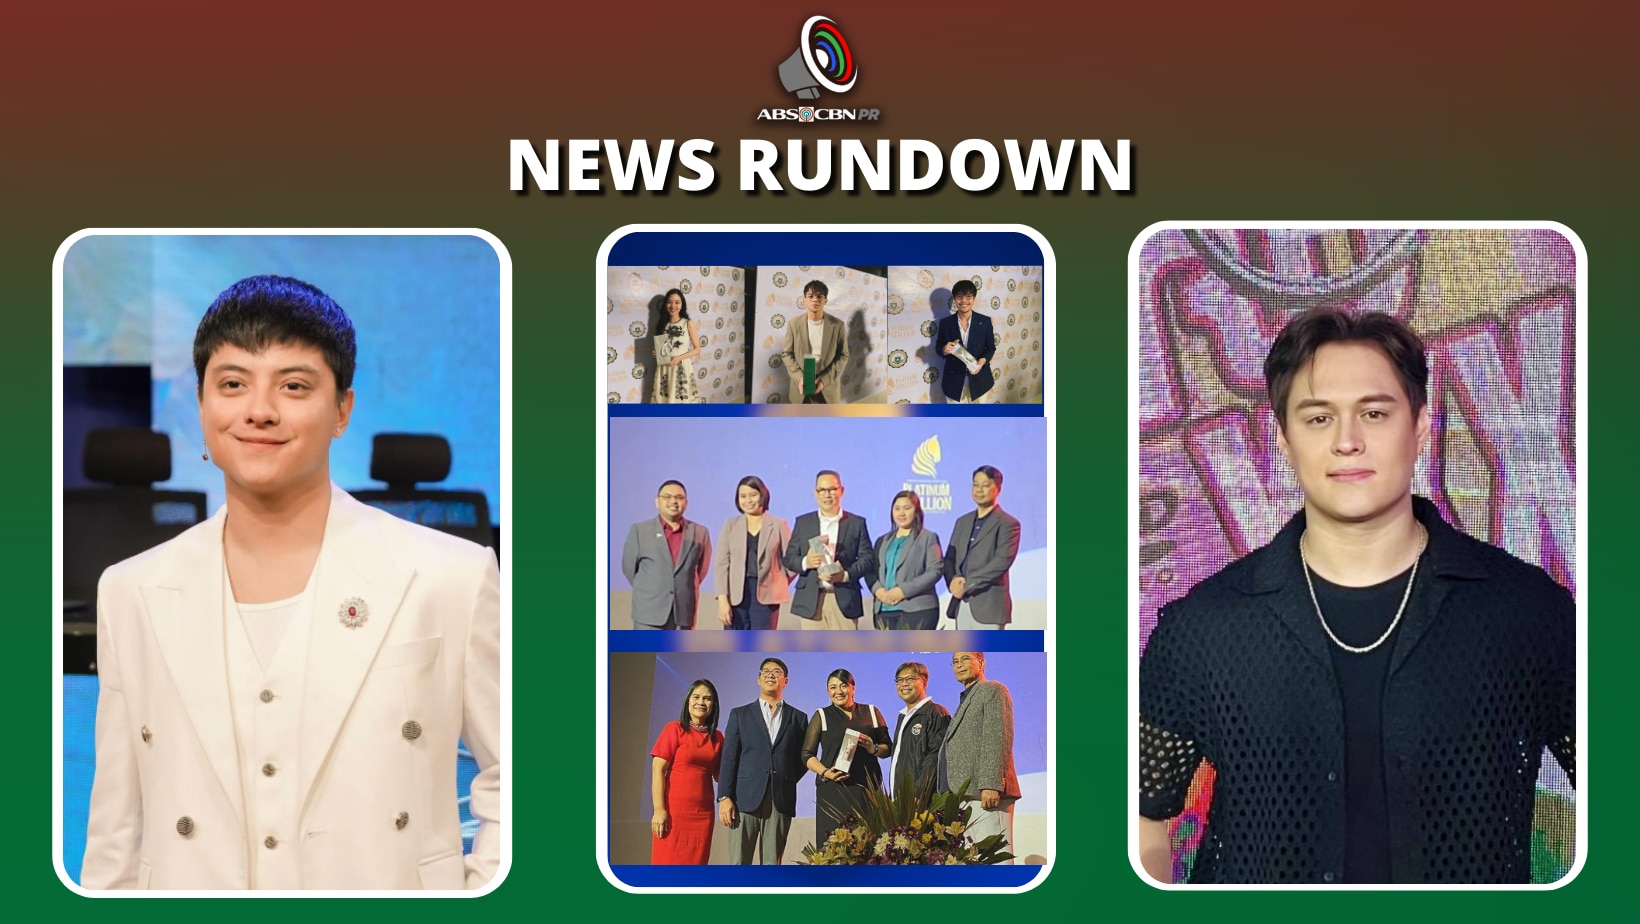 #ABSCBNPRNewsRundown | DANIEL PADILLA STILL A CERTIFIED KAPAMILYA, BARES NEW PROJECTS